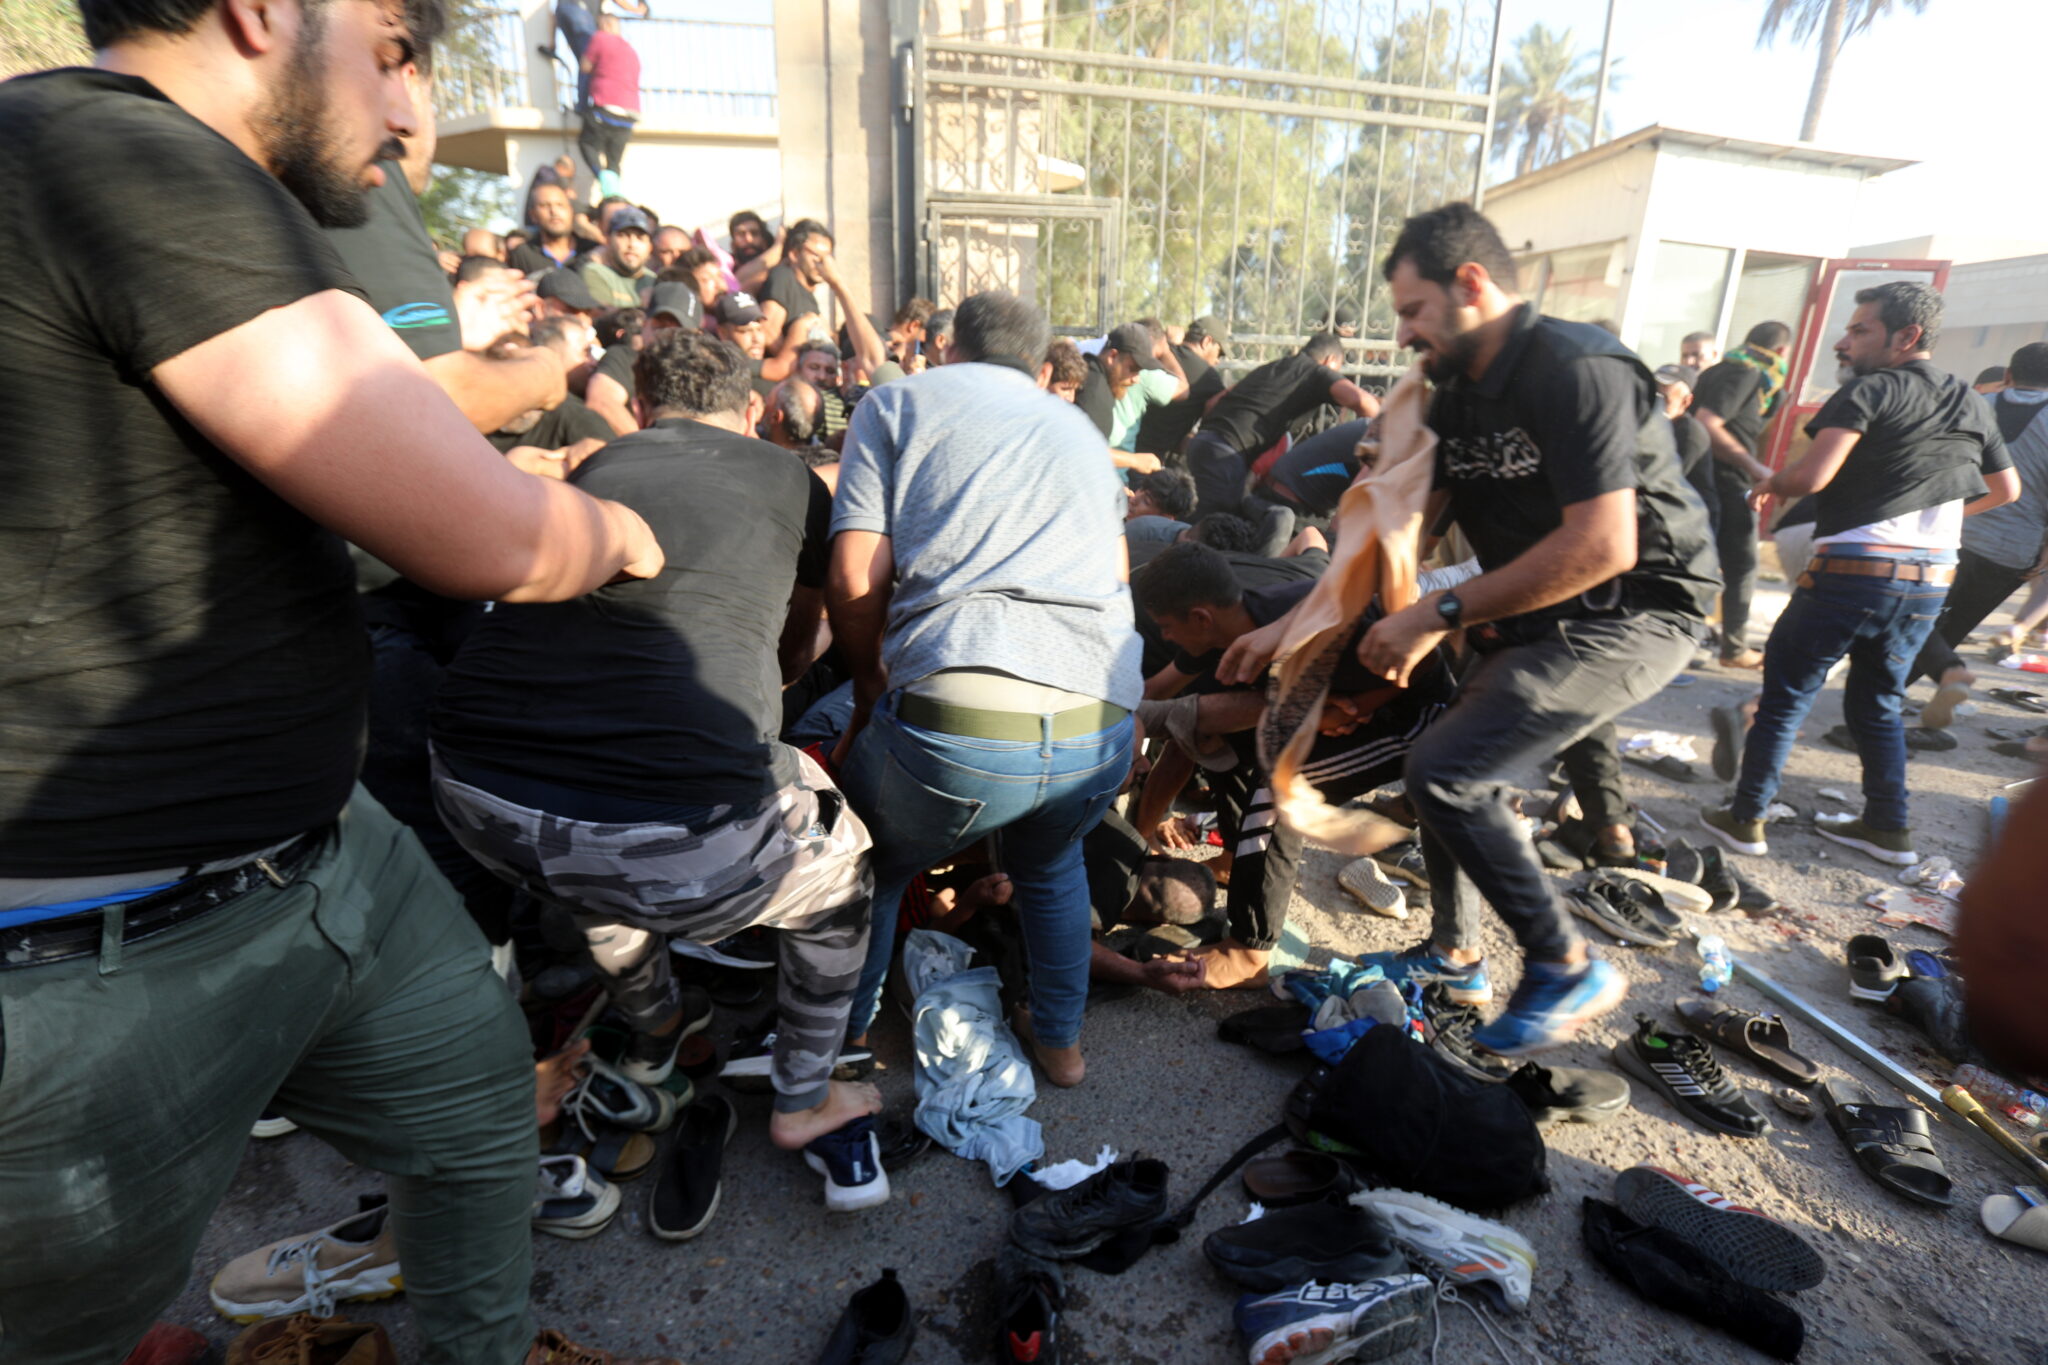 Сторонники ас-Садра штурмуют Республиканский дворец в Багдаде. Фото АООС/Ахмед Джалиль/Scanpix/LETA